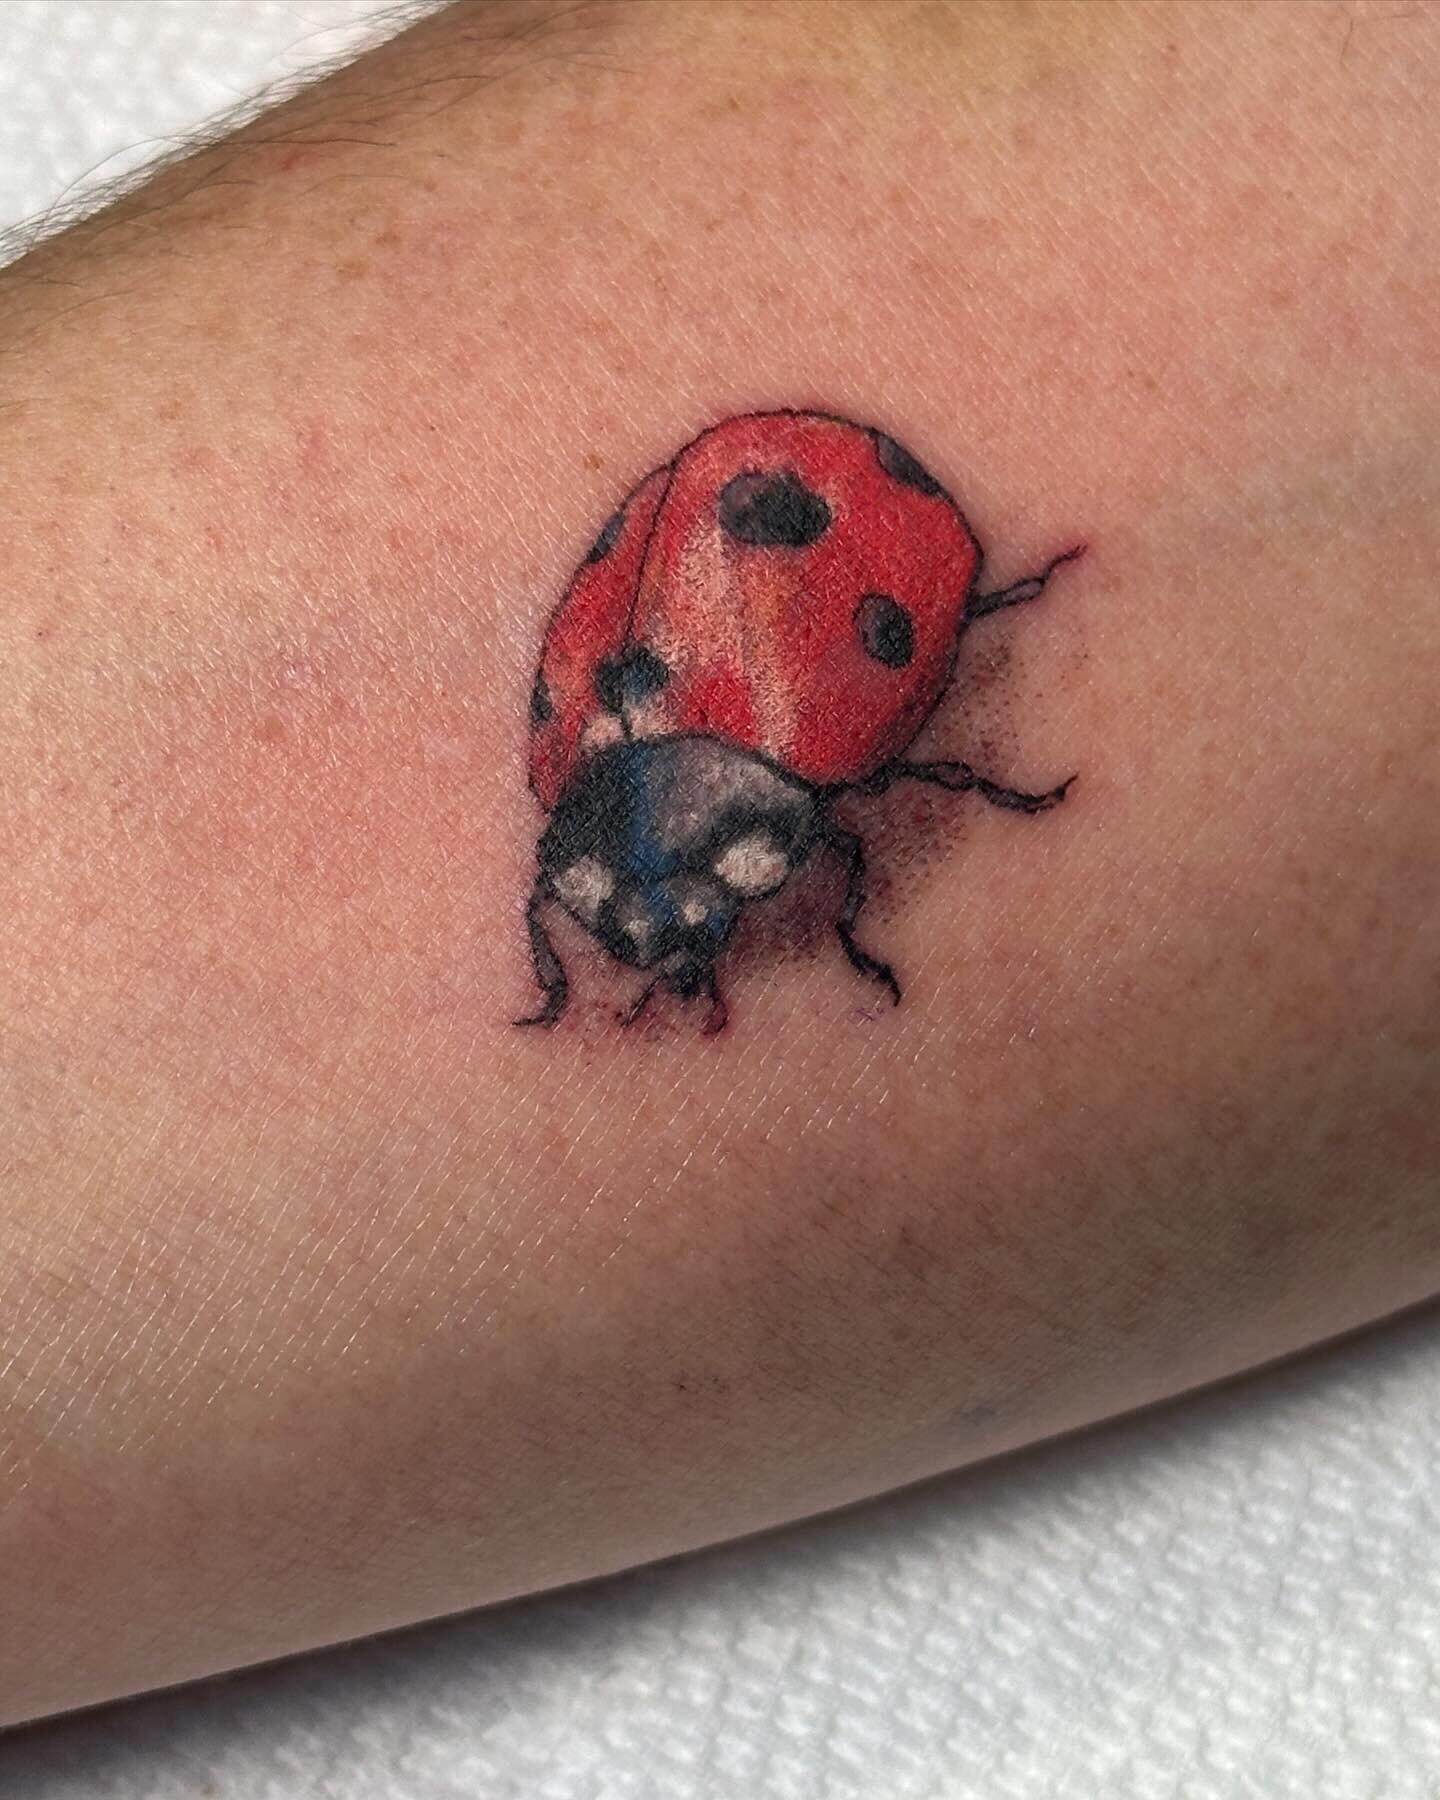 #ladybug 
 @shamrocktattoocompany
#tattoo #sabre #tattooartist
#westhartford #hartford #cttattoos #cttattooartist #ctart 
@sabretooth_tattoo